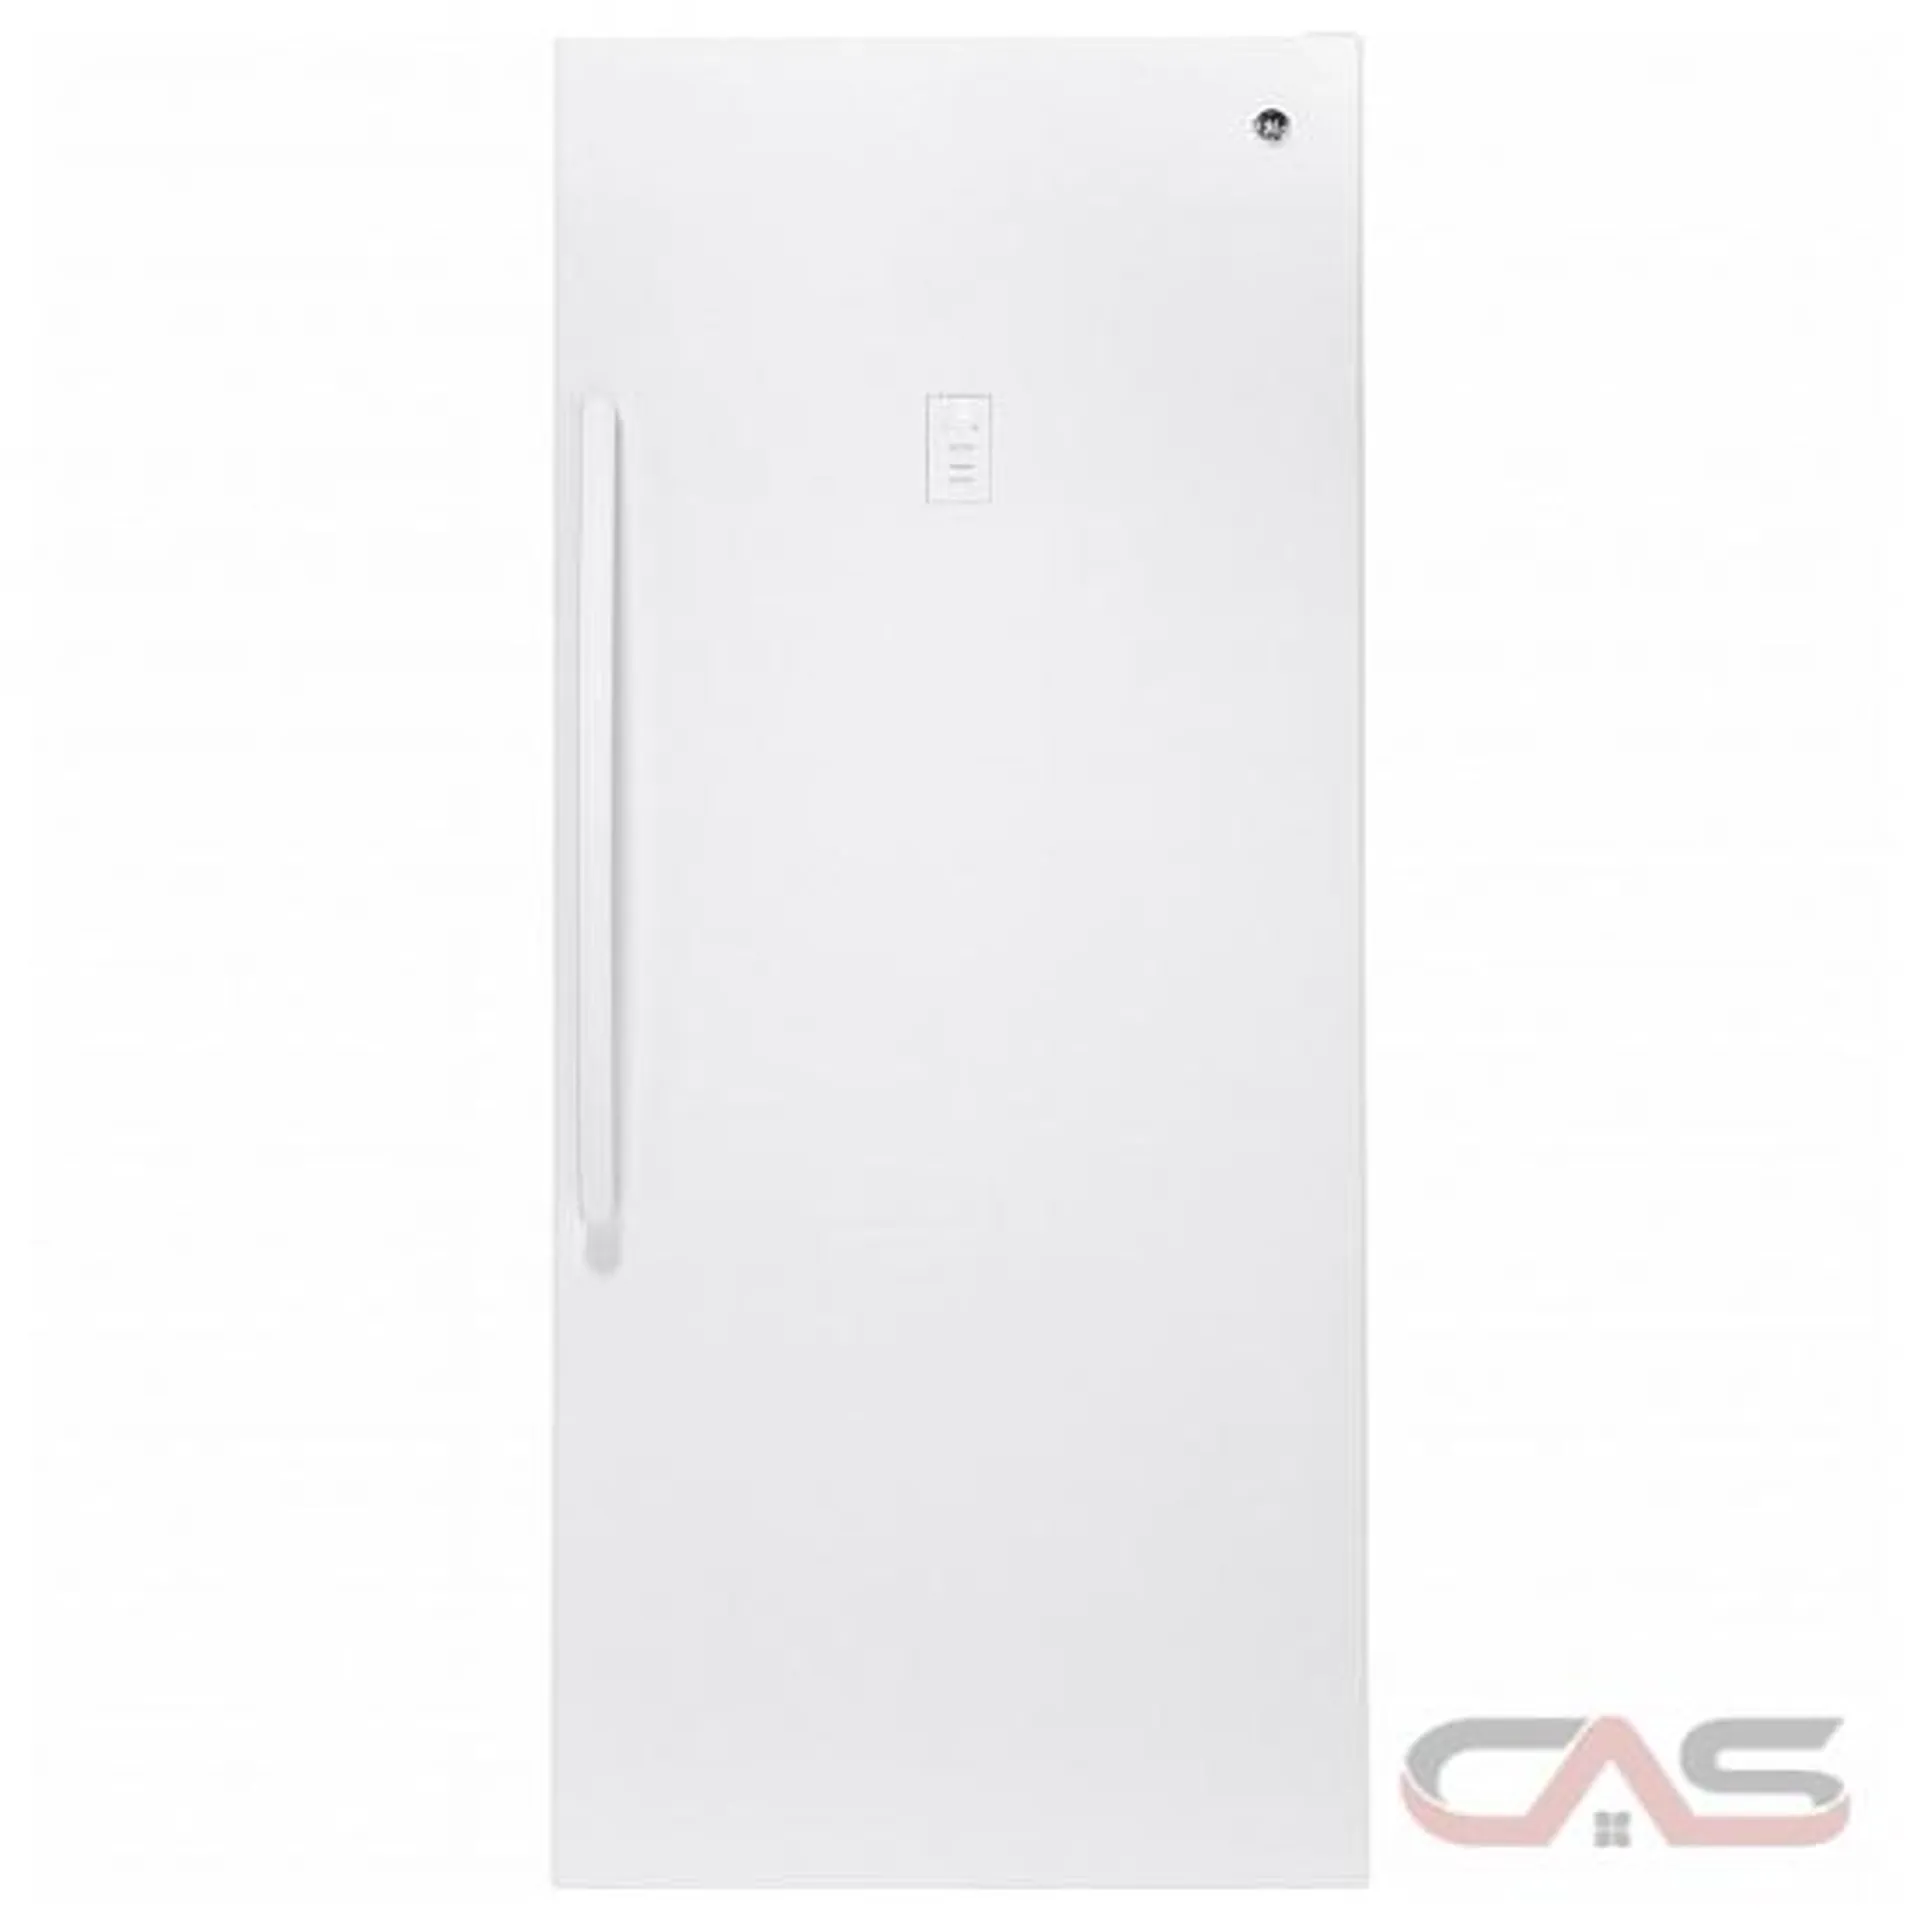 GE FUF21SMRWW Upright Freezer, 32 7/8" Width, 21.3 cu. ft. Capacity, Frost Free, Interior Light (Freezer), White colour Garage Ready